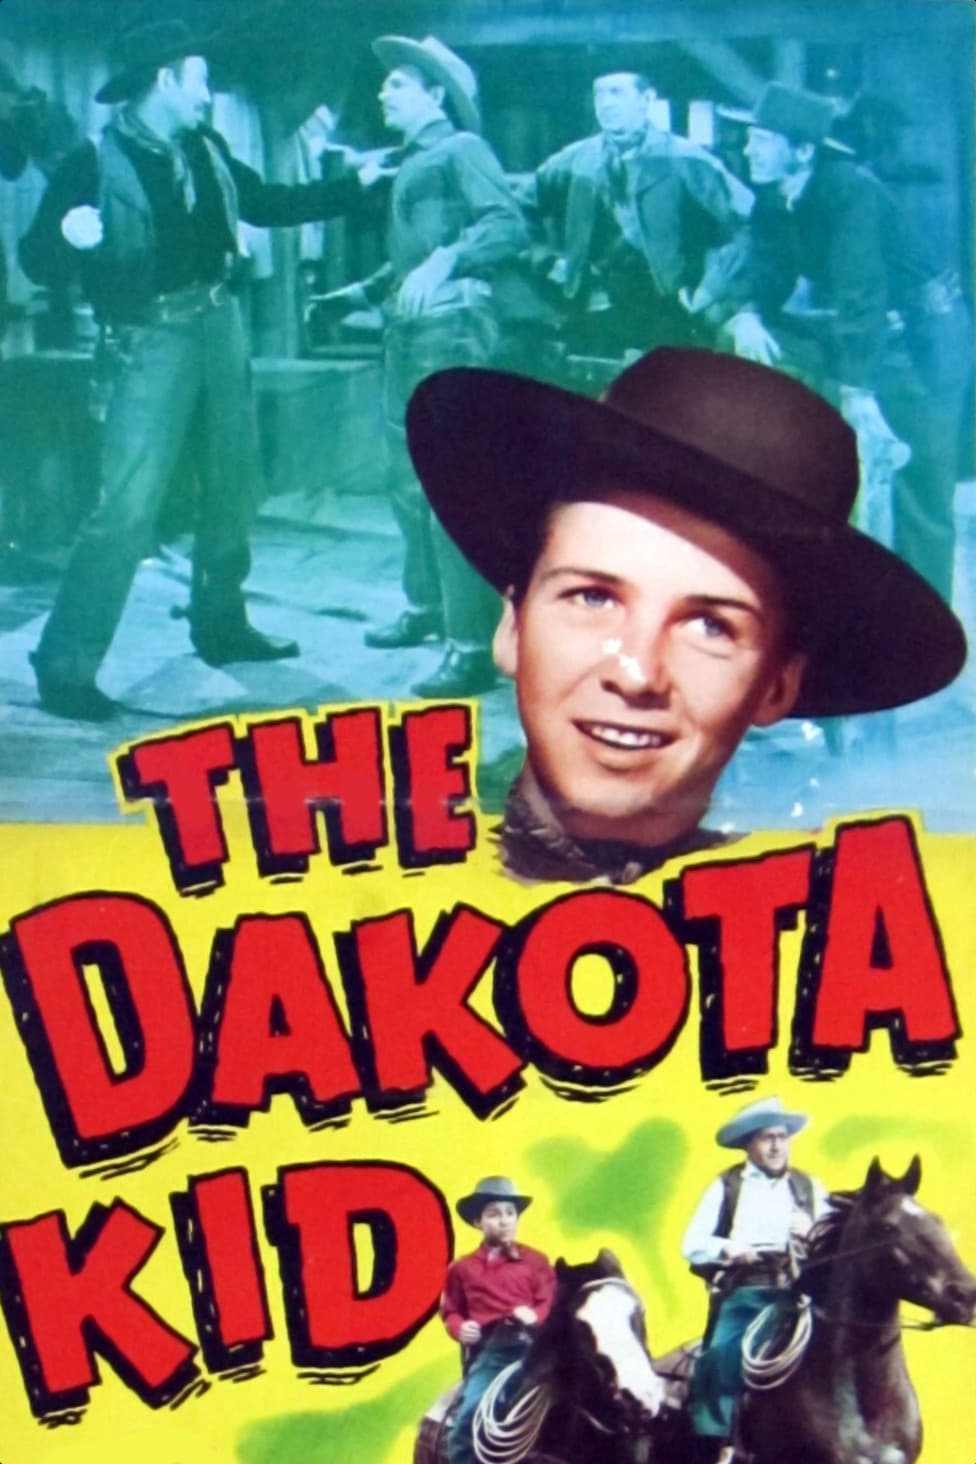 The Dakota Kid (1951)